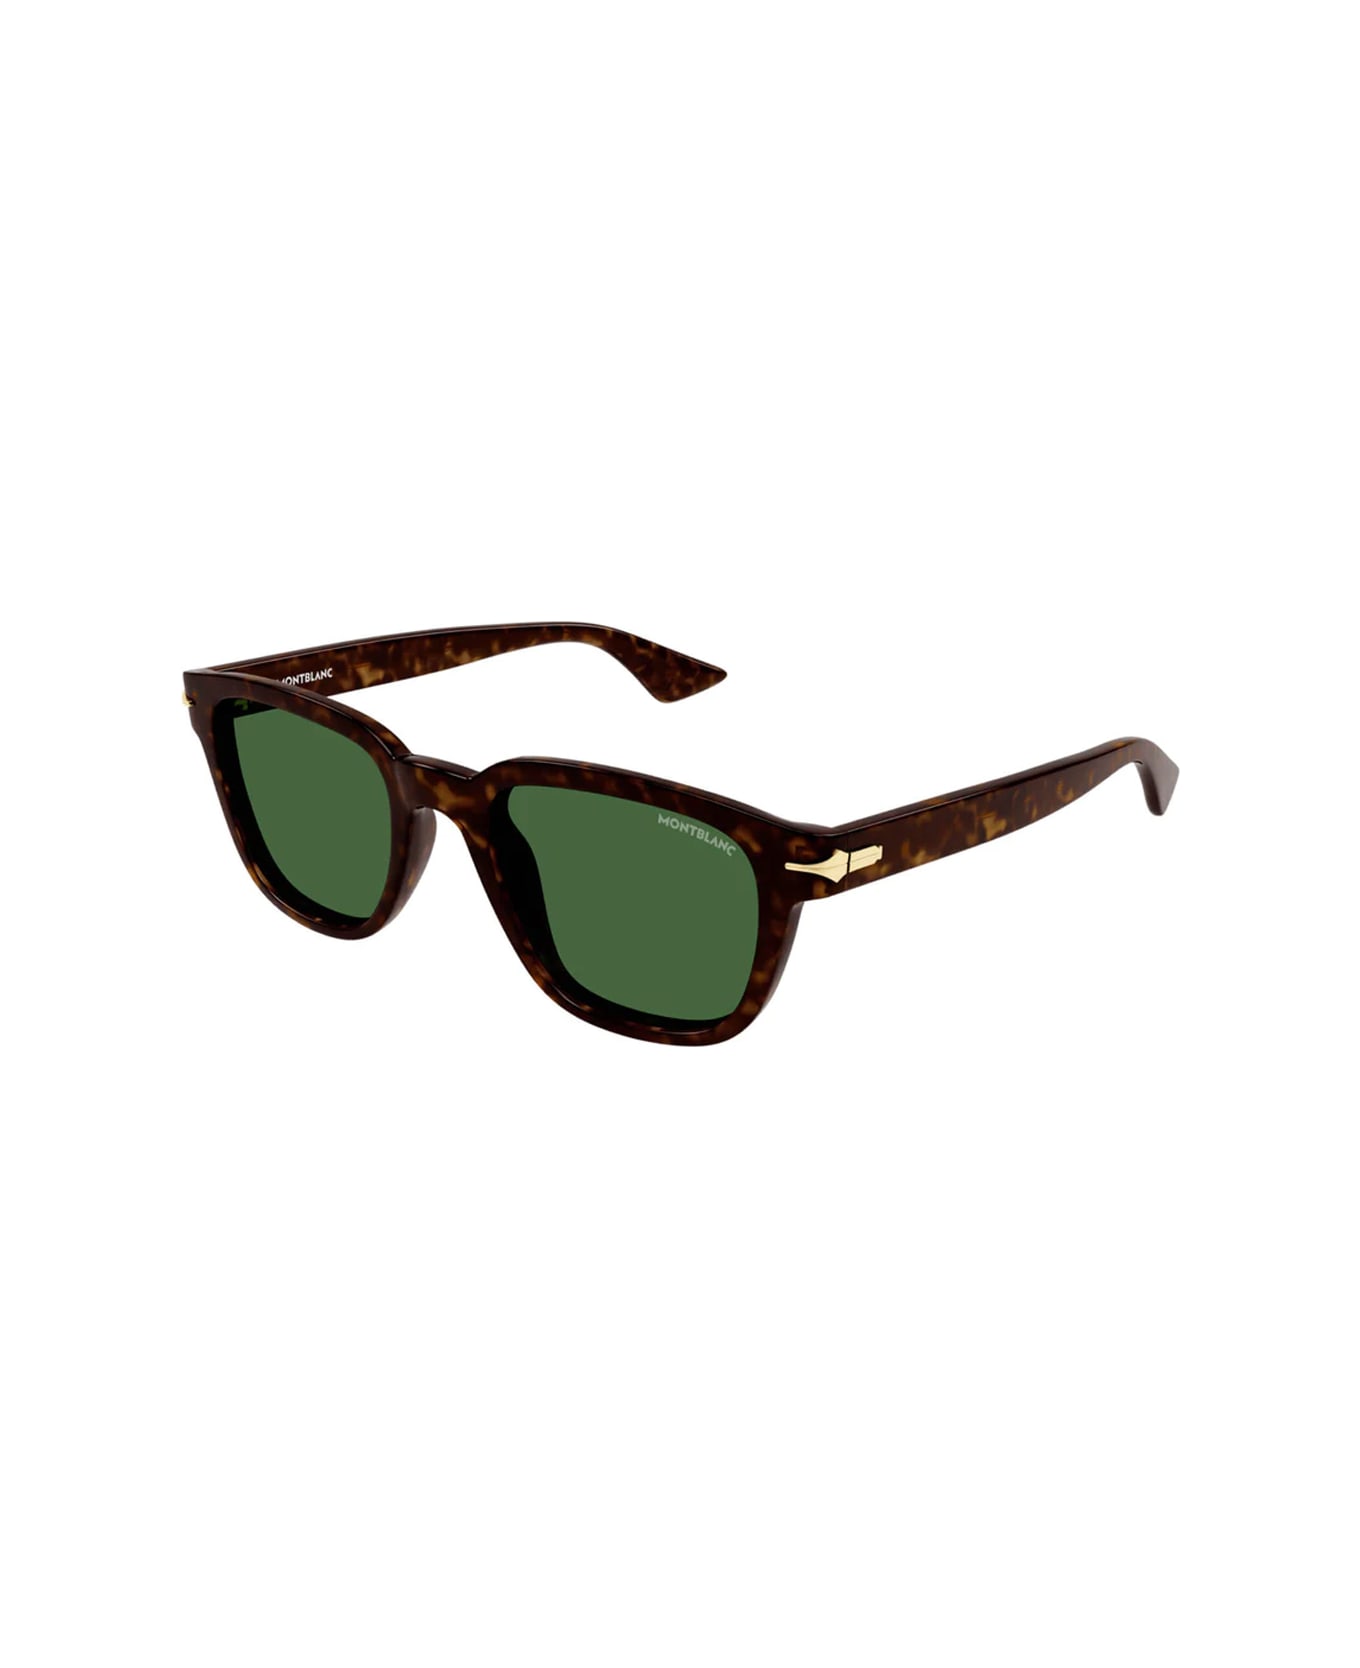 Montblanc Mb0302s 007 Sunglasses - Marrone